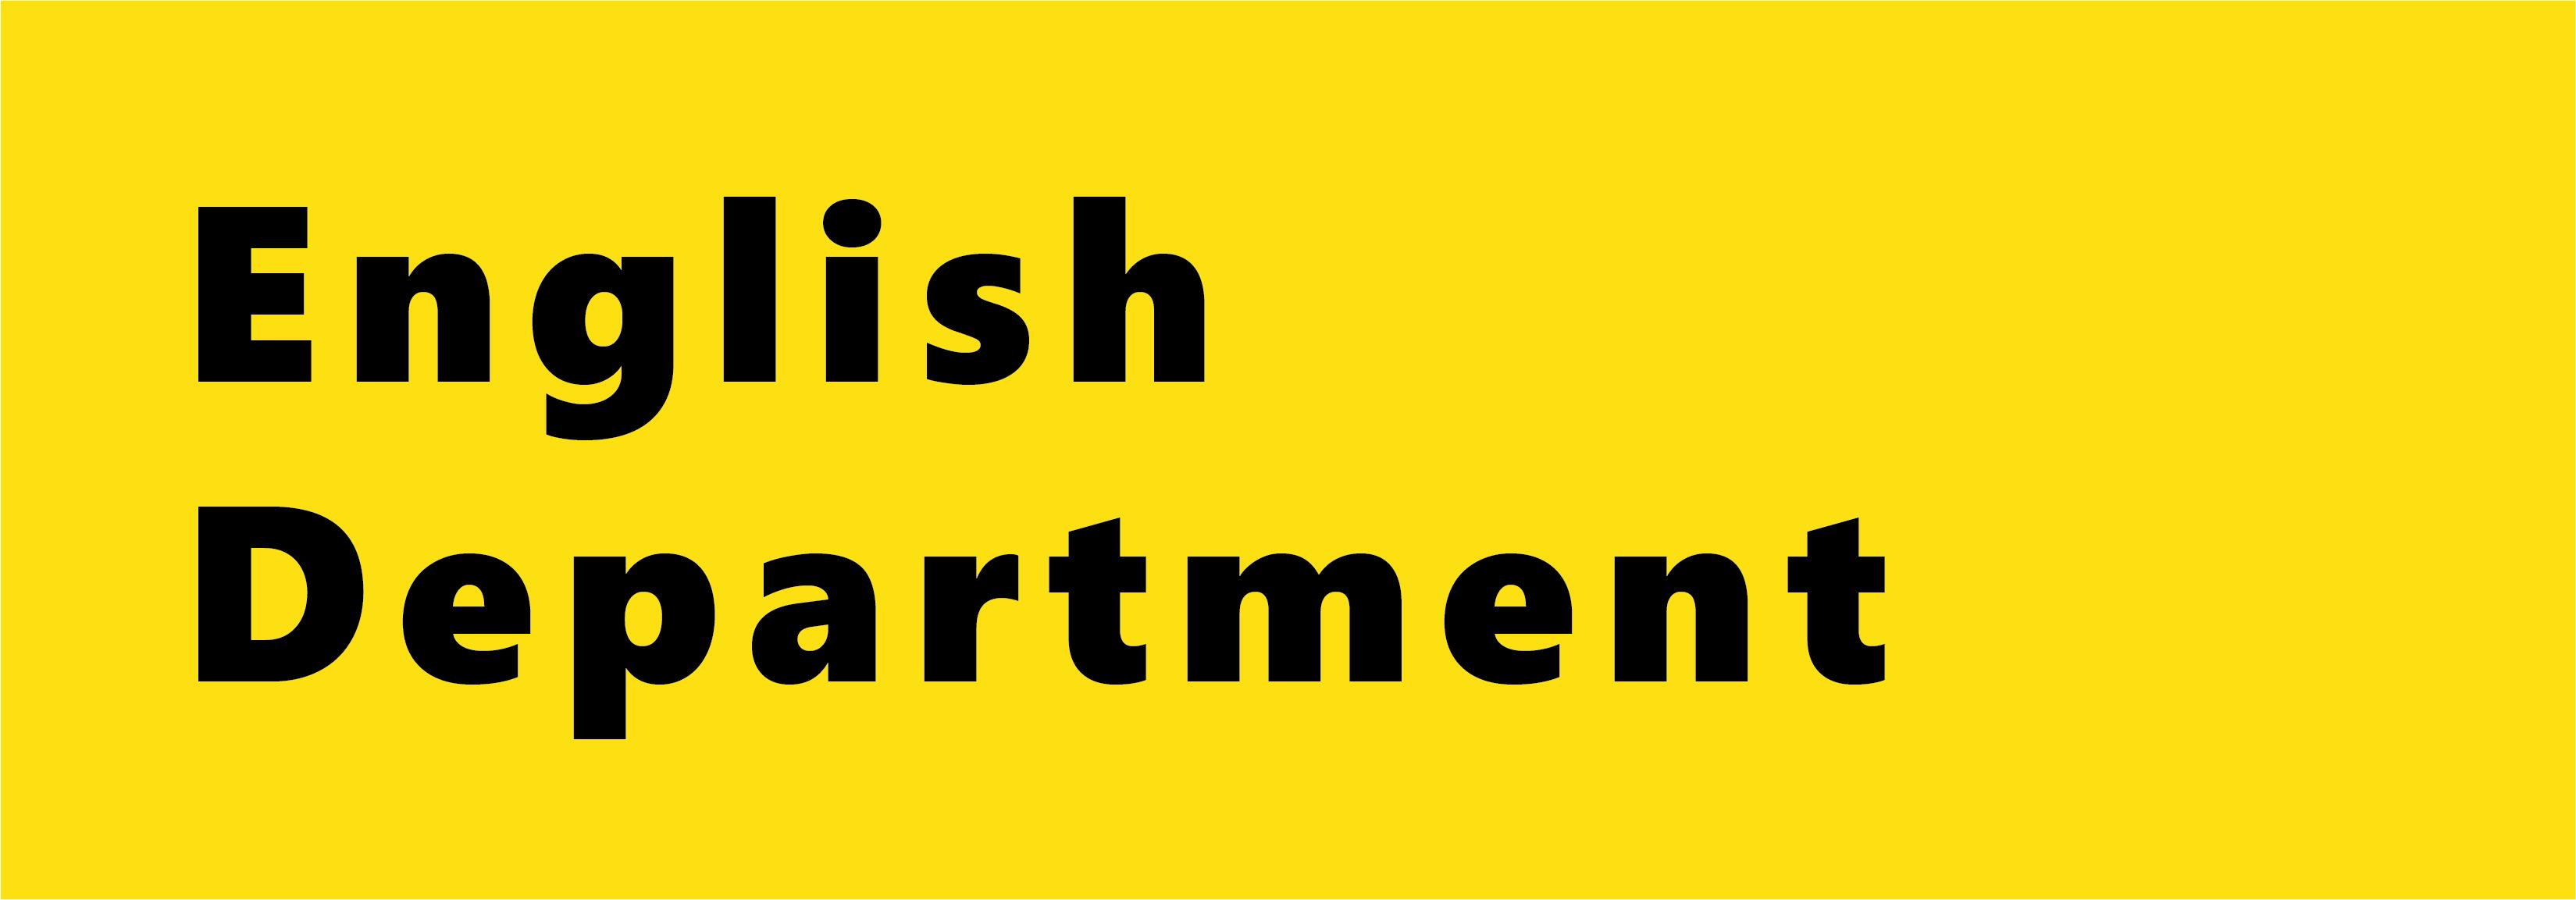 English Department banner